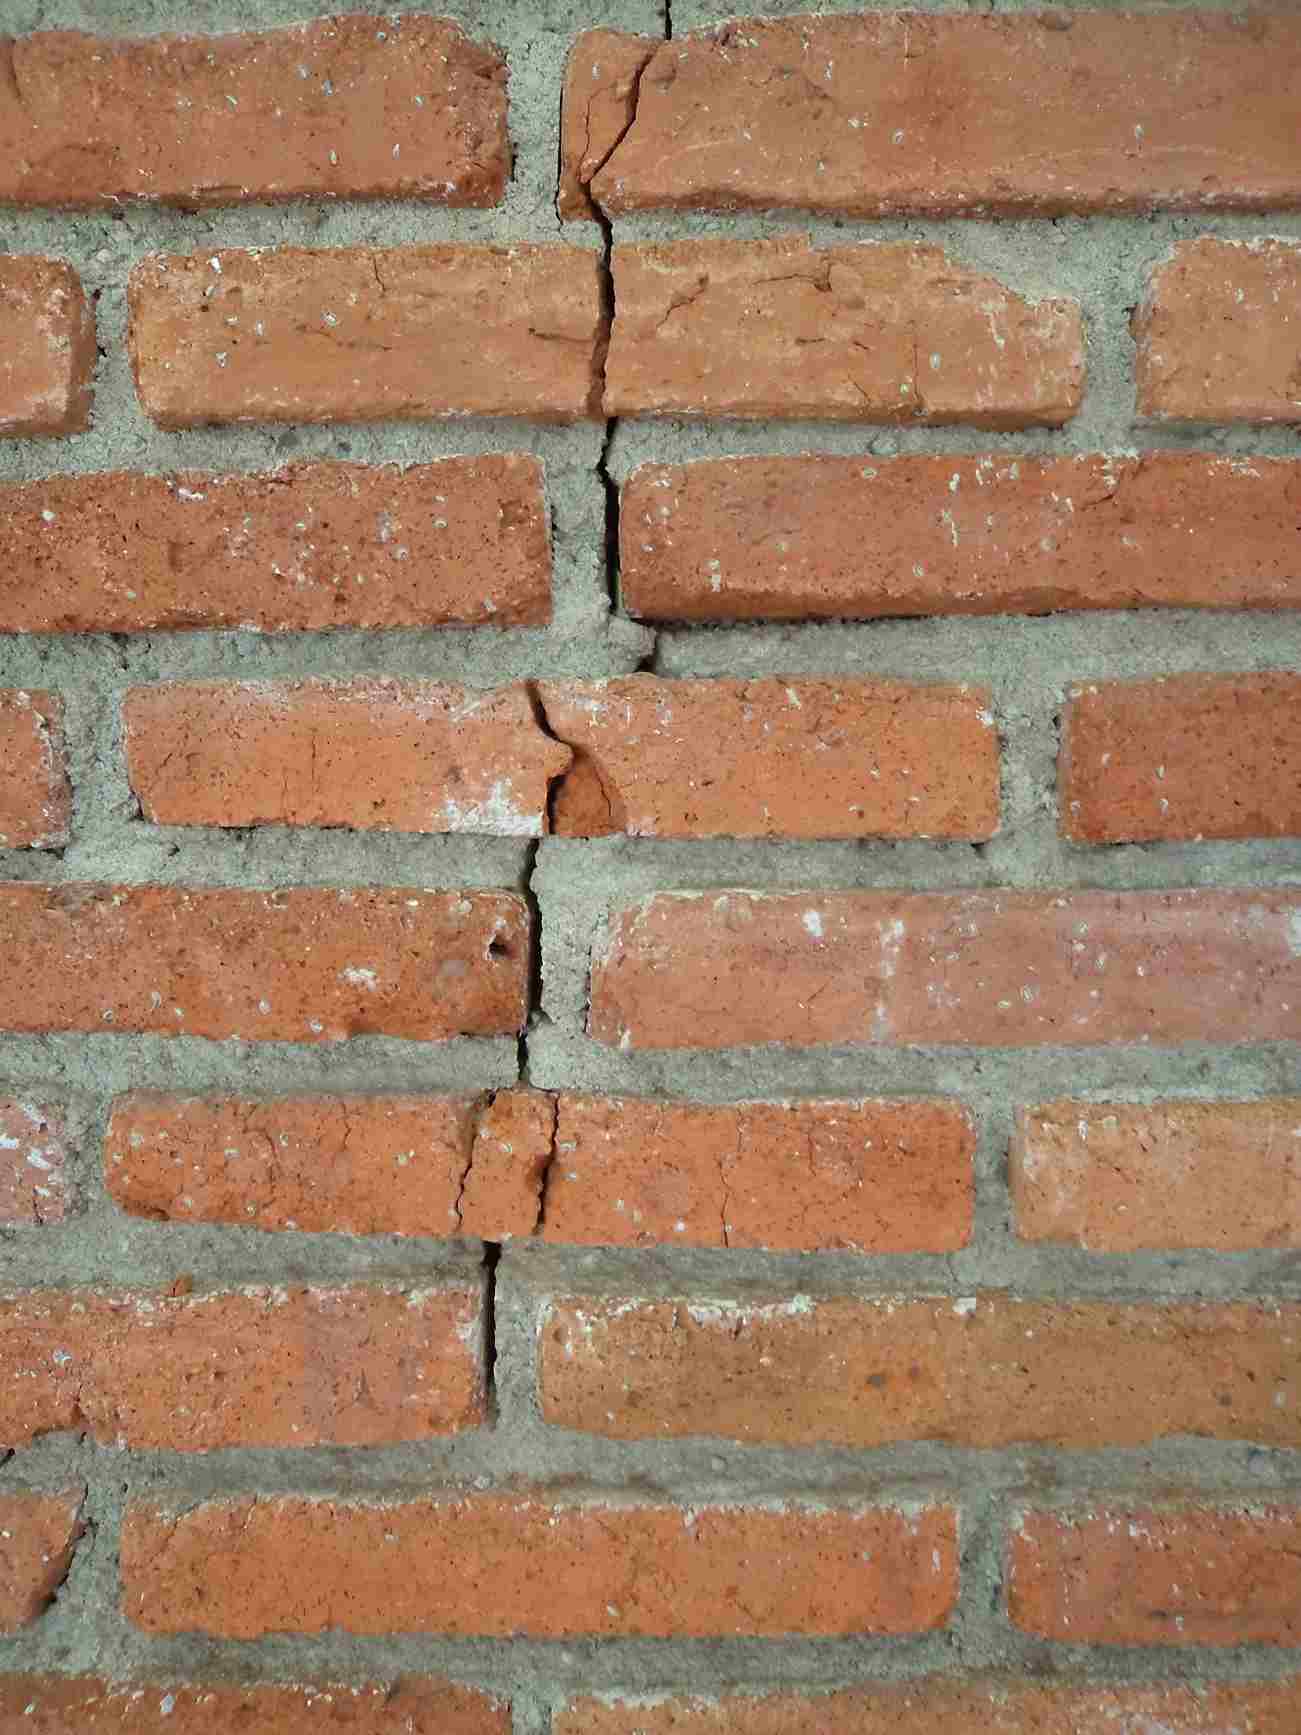 Brick wall crack